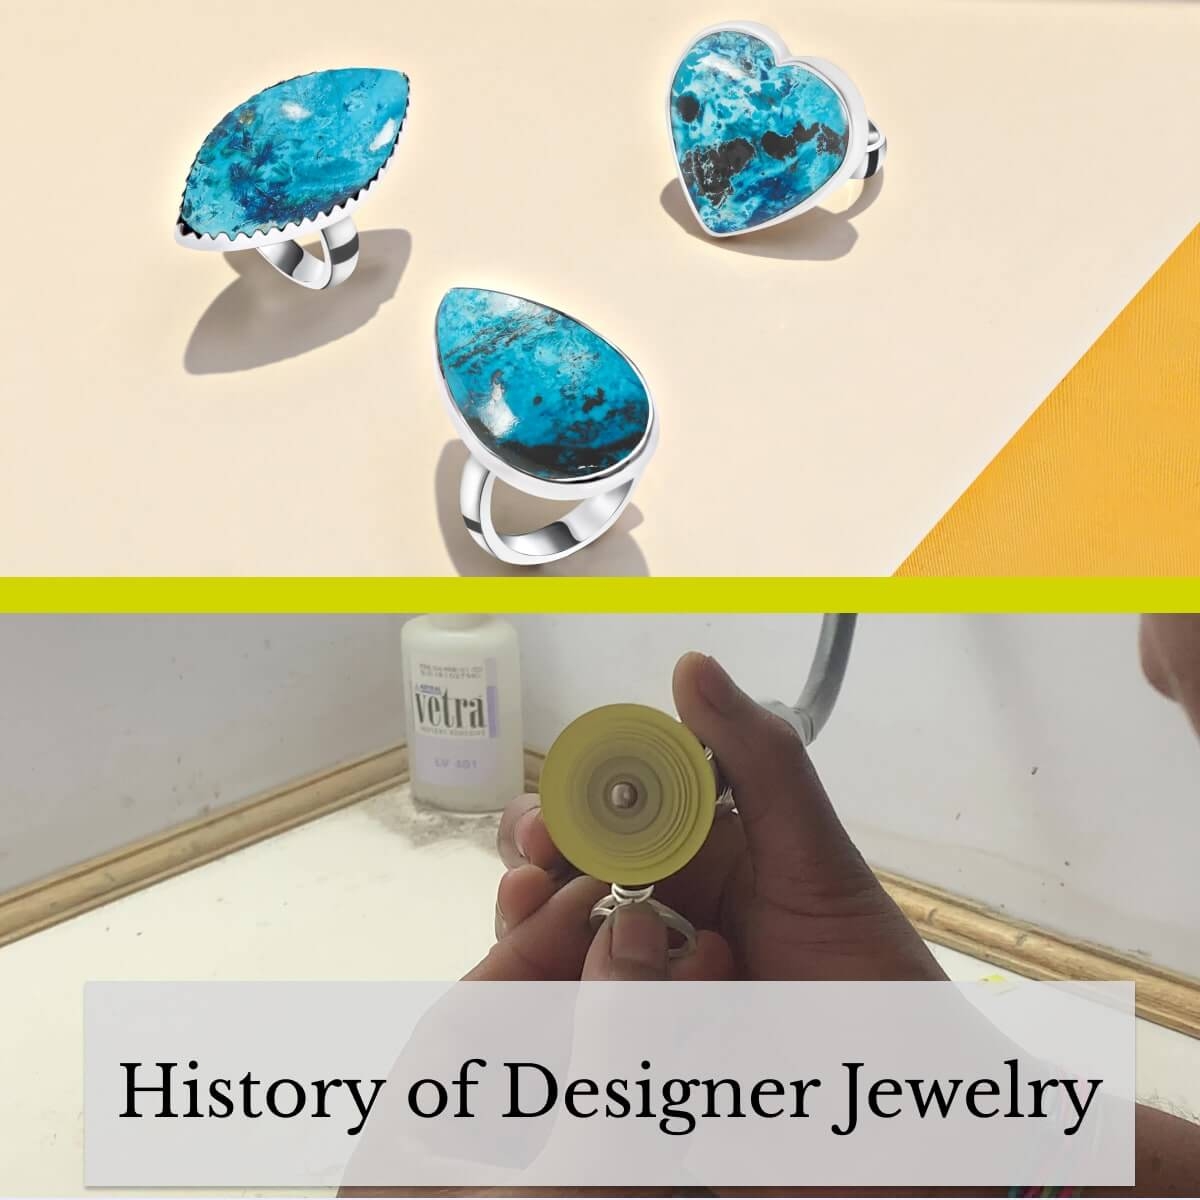 The Legacy of Designer Jewelry